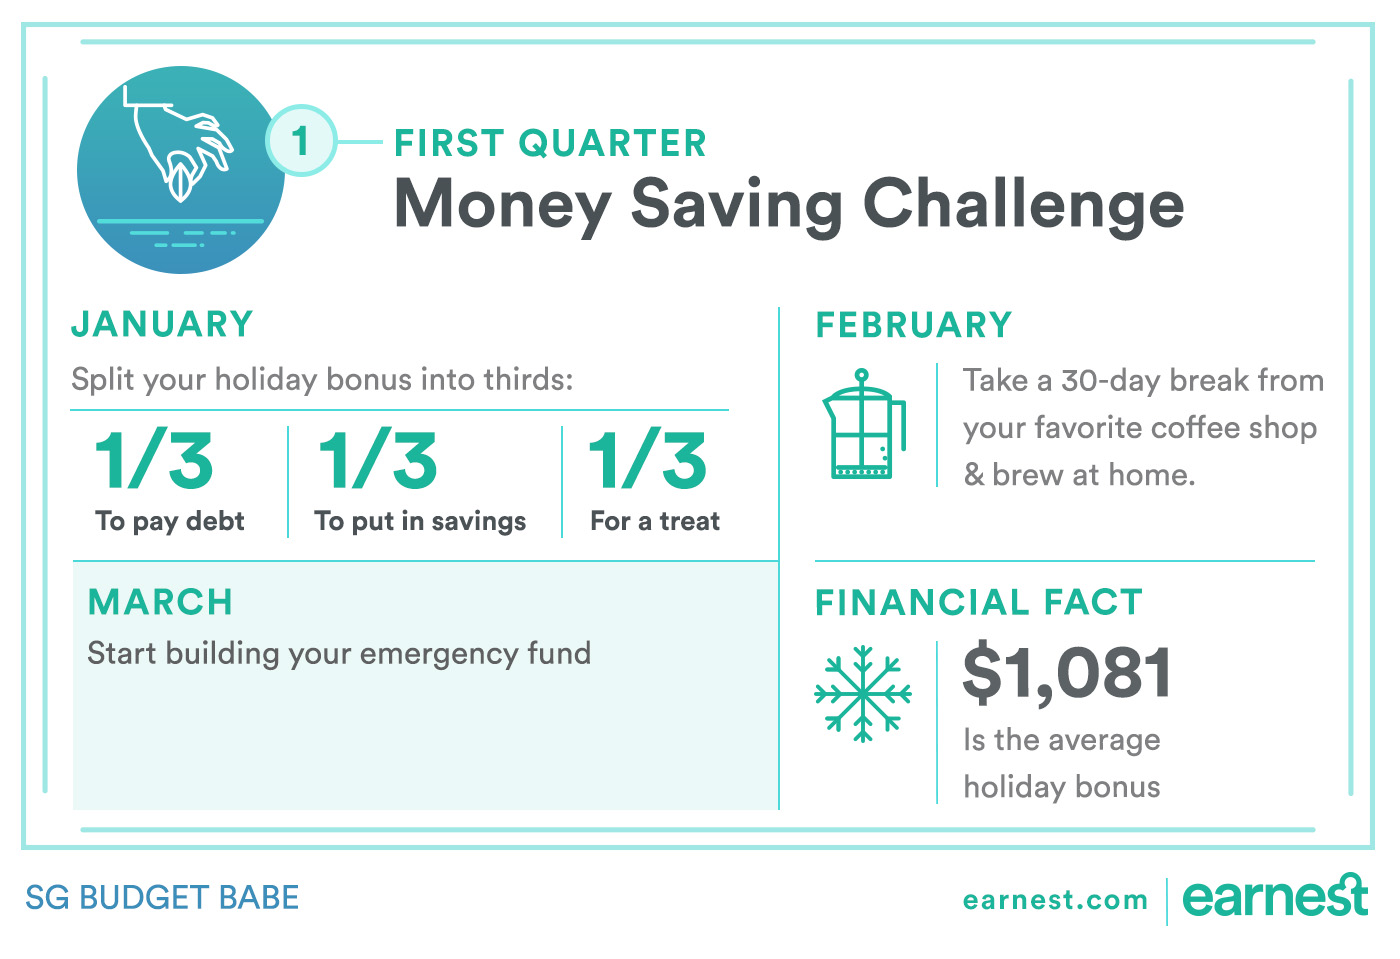 12 Month Money Savings Challenge 